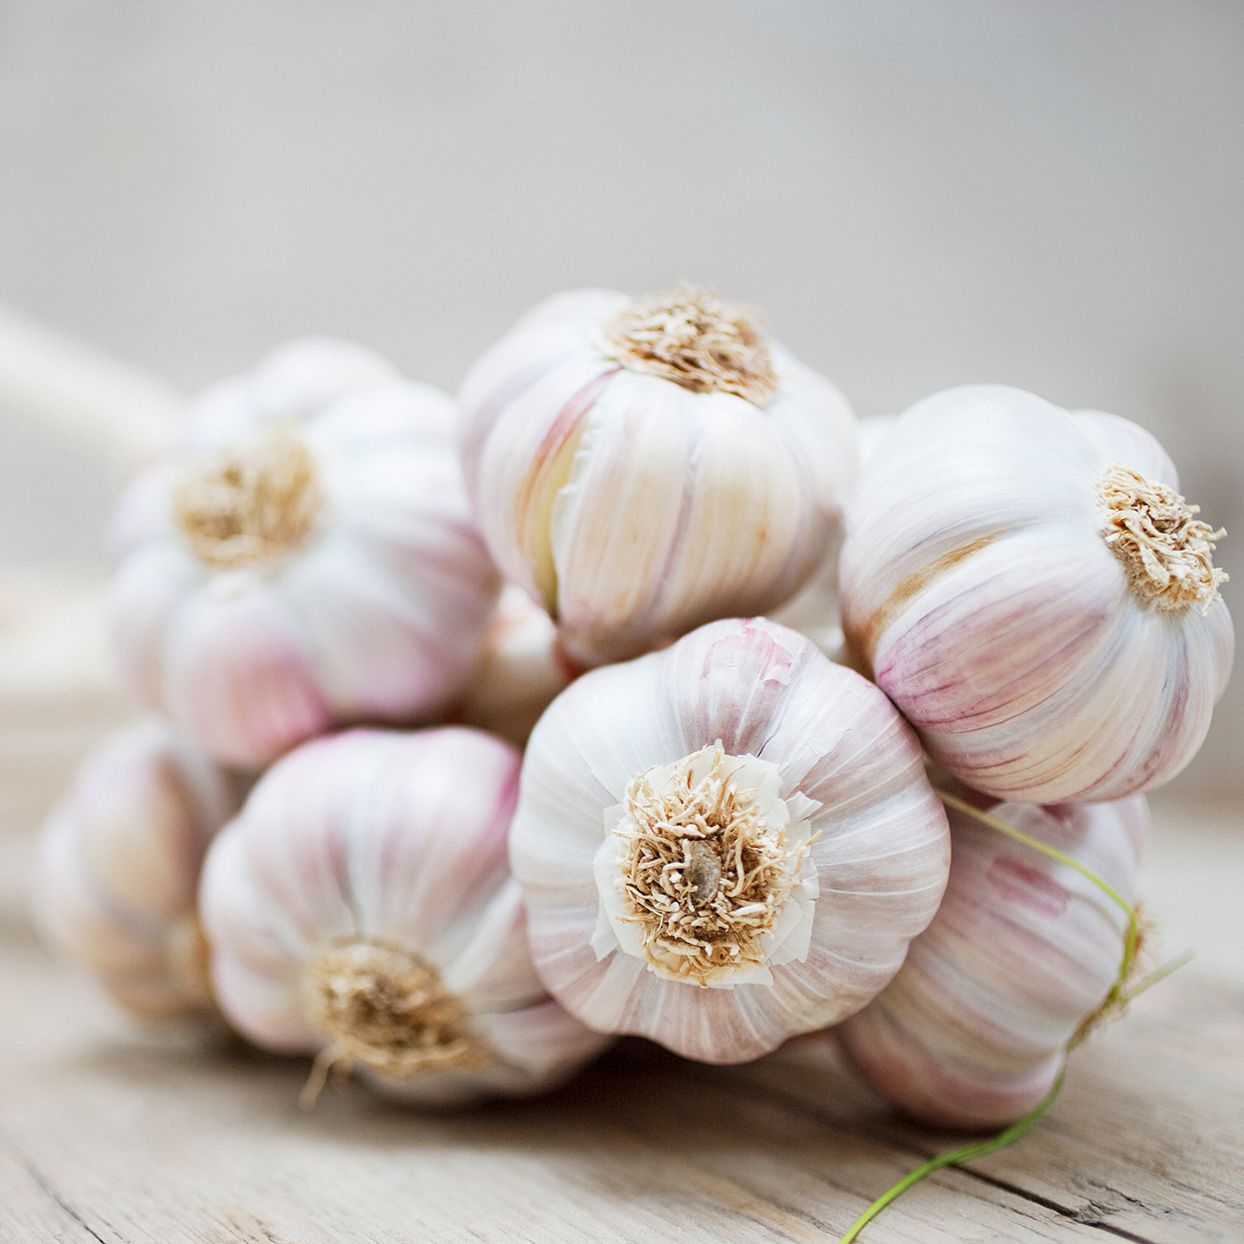 Garlic - foods that lower cholesterol